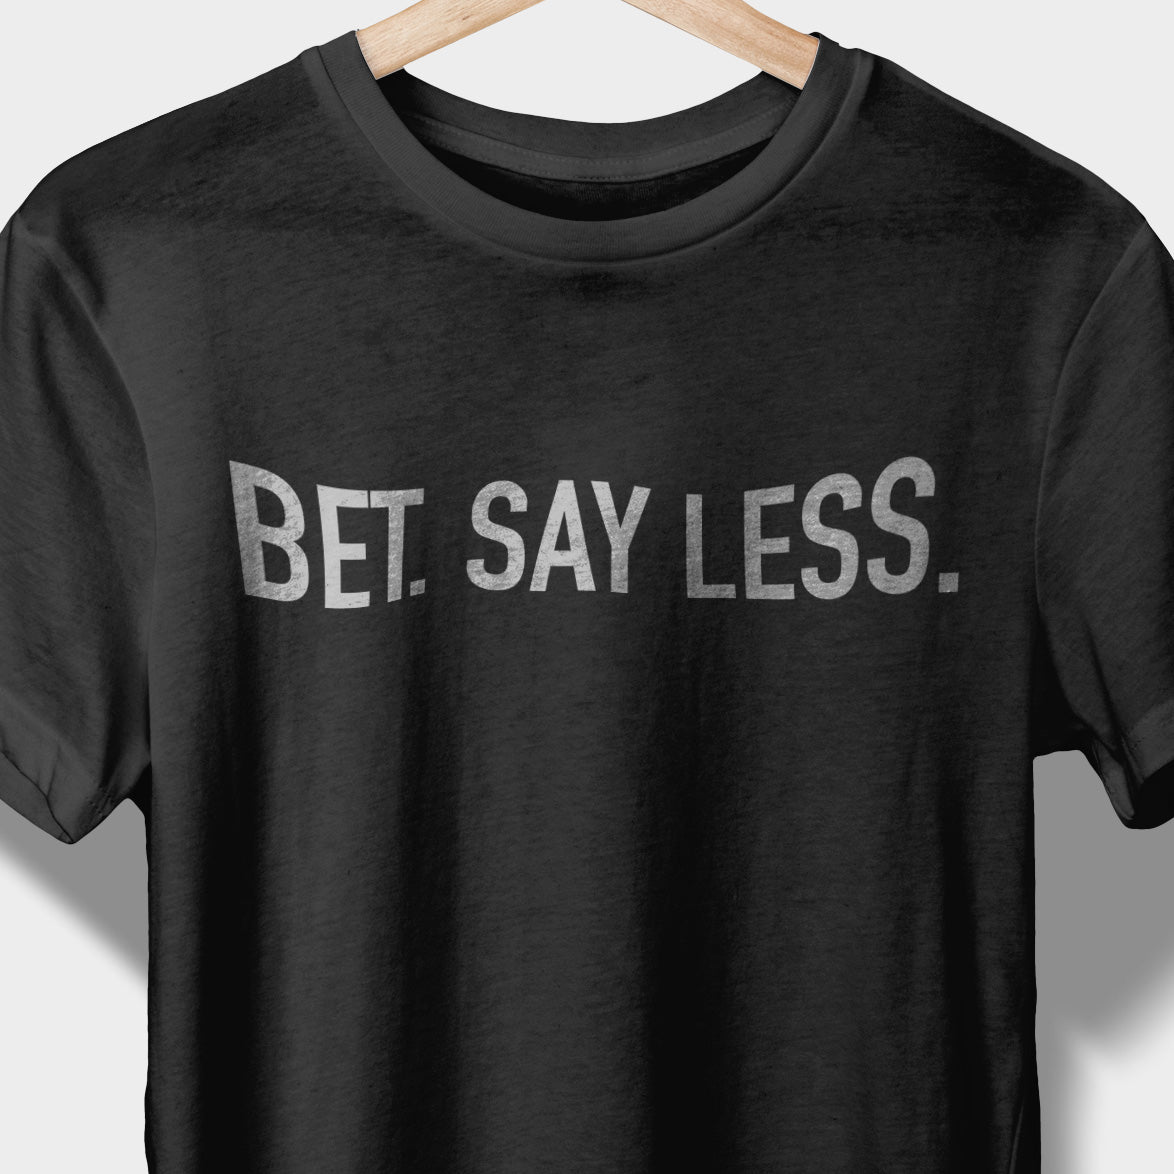 Bet. Say Less.